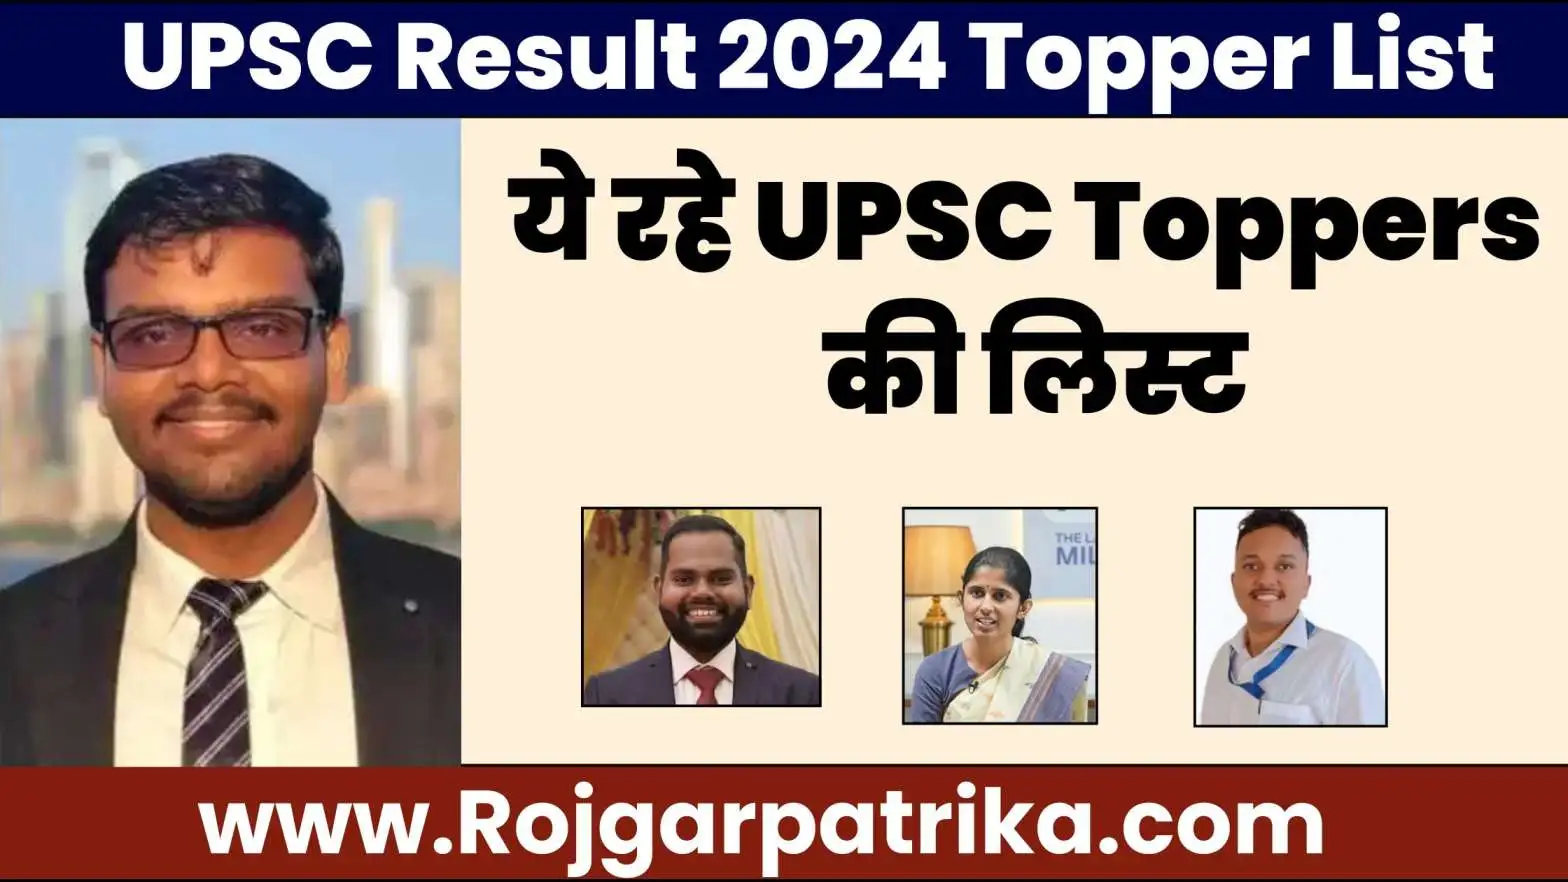 Upsc-Result-2024-Topper-List